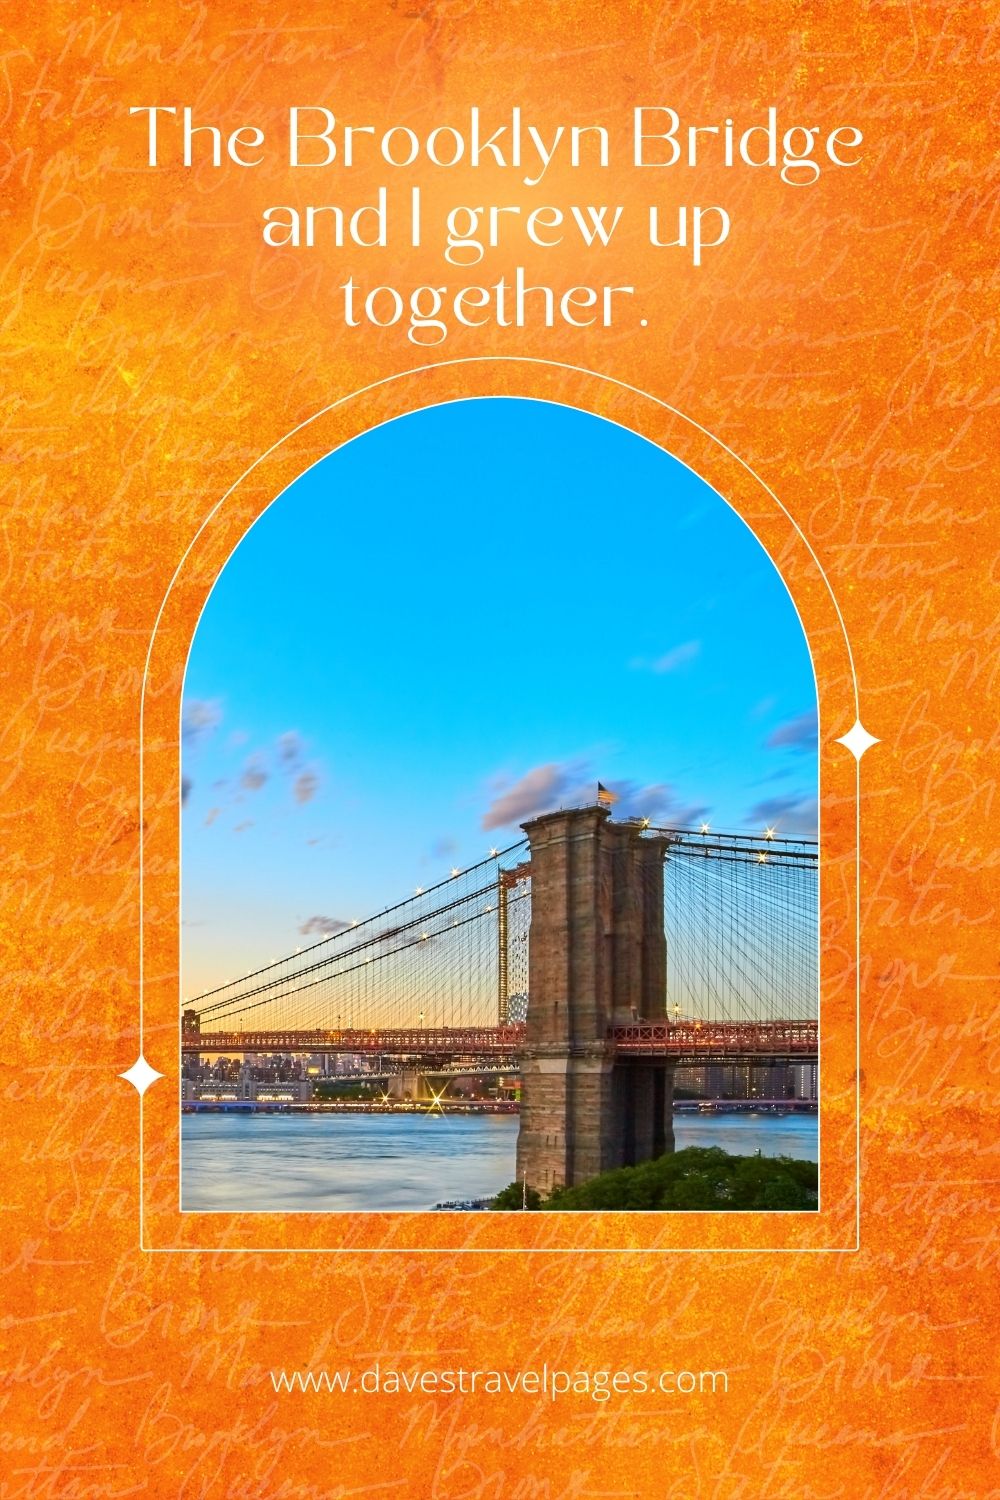 The Brooklyn Bridge and I grew up together